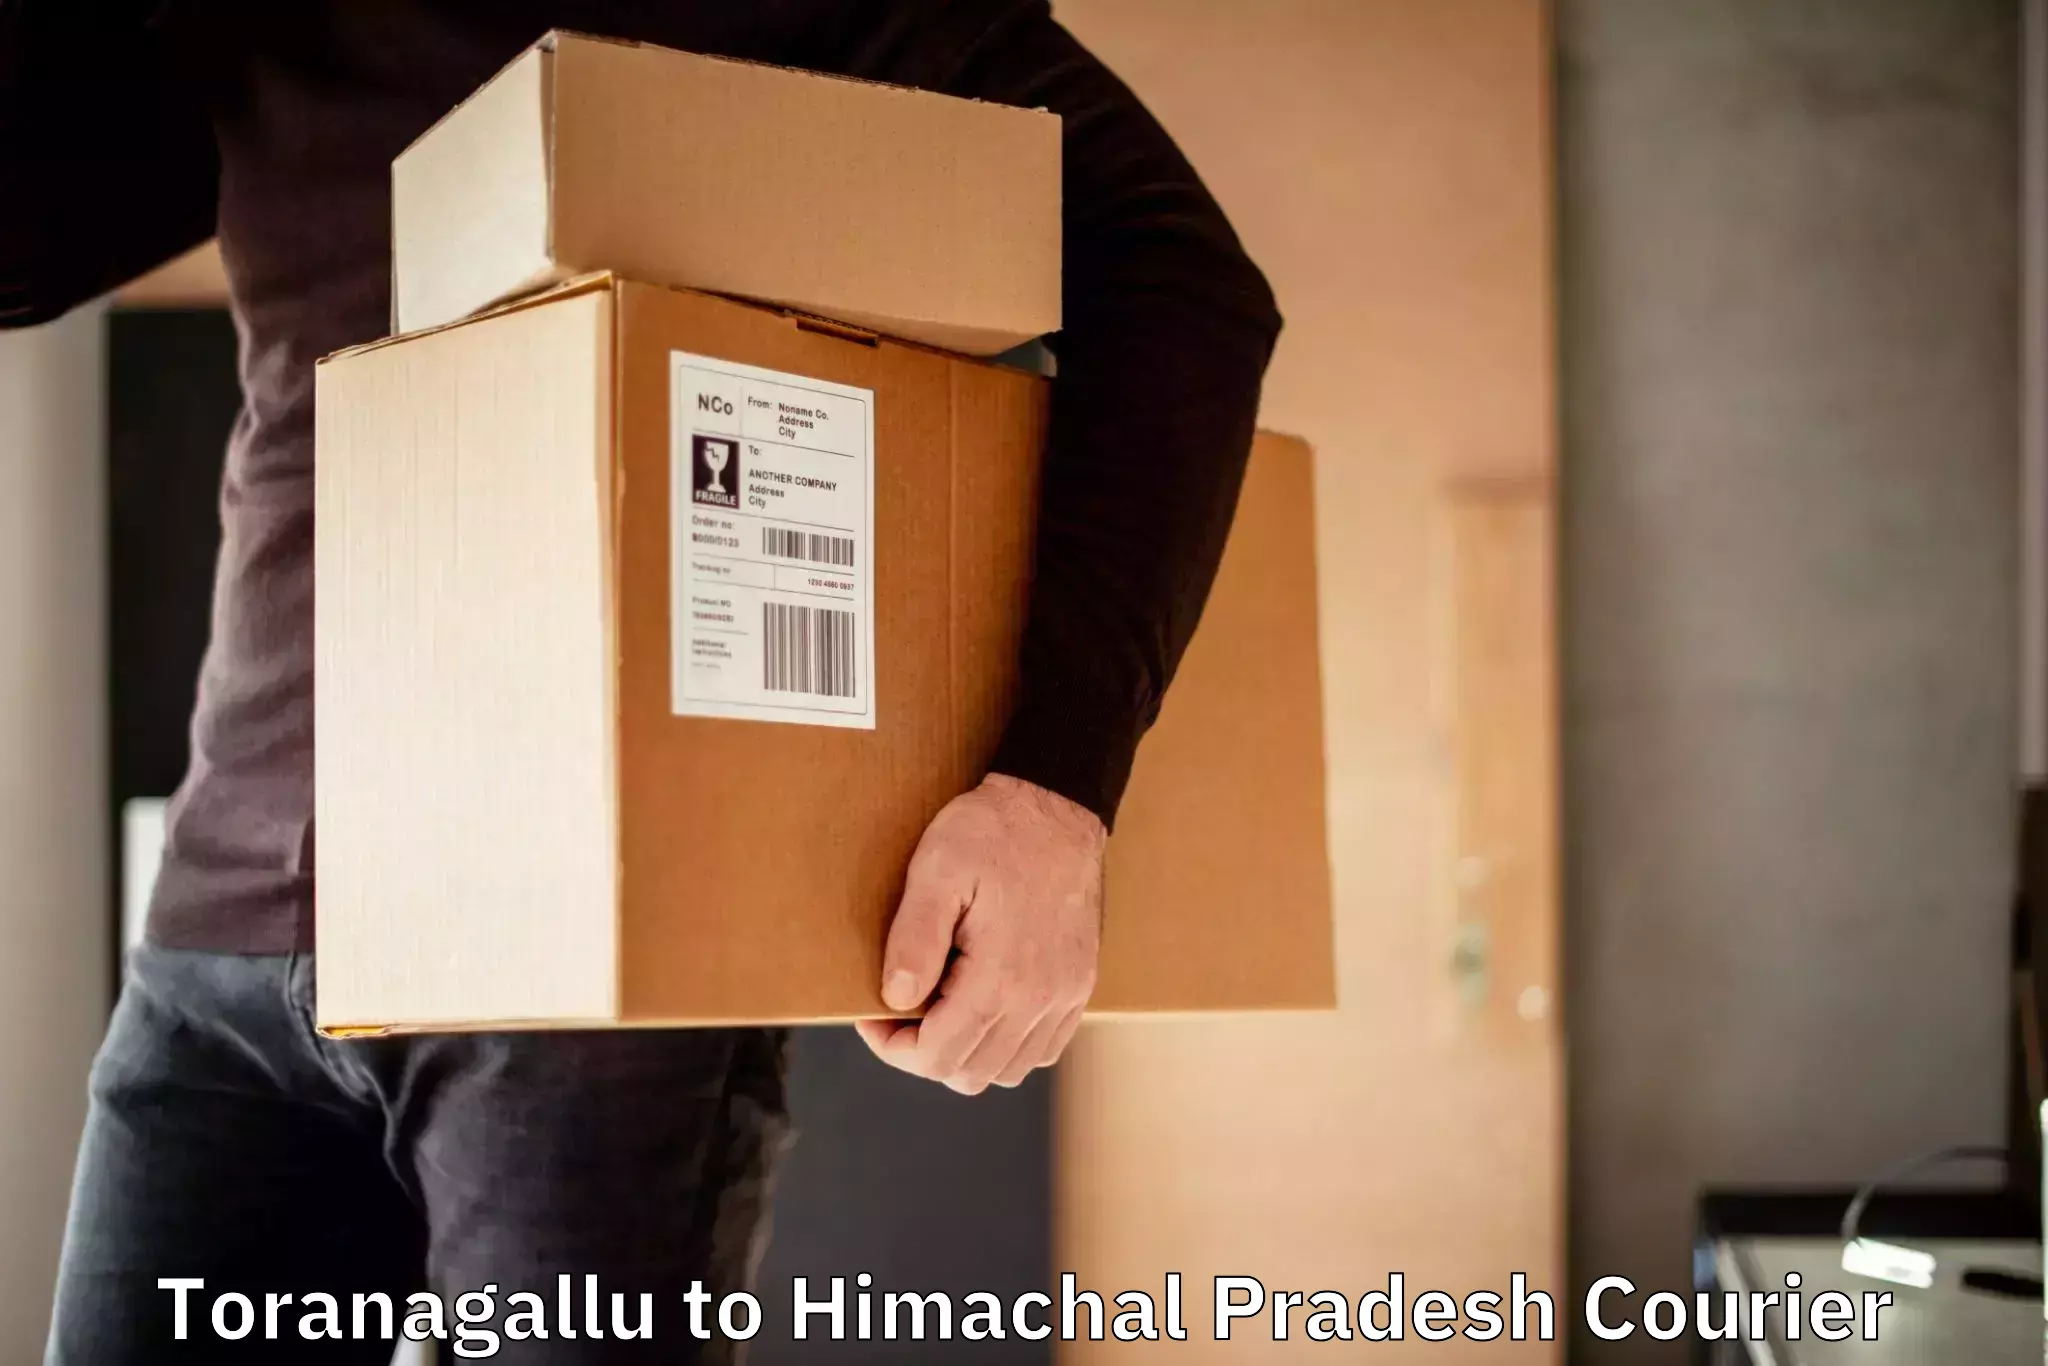 Efficient order fulfillment Toranagallu to Himachal Pradesh